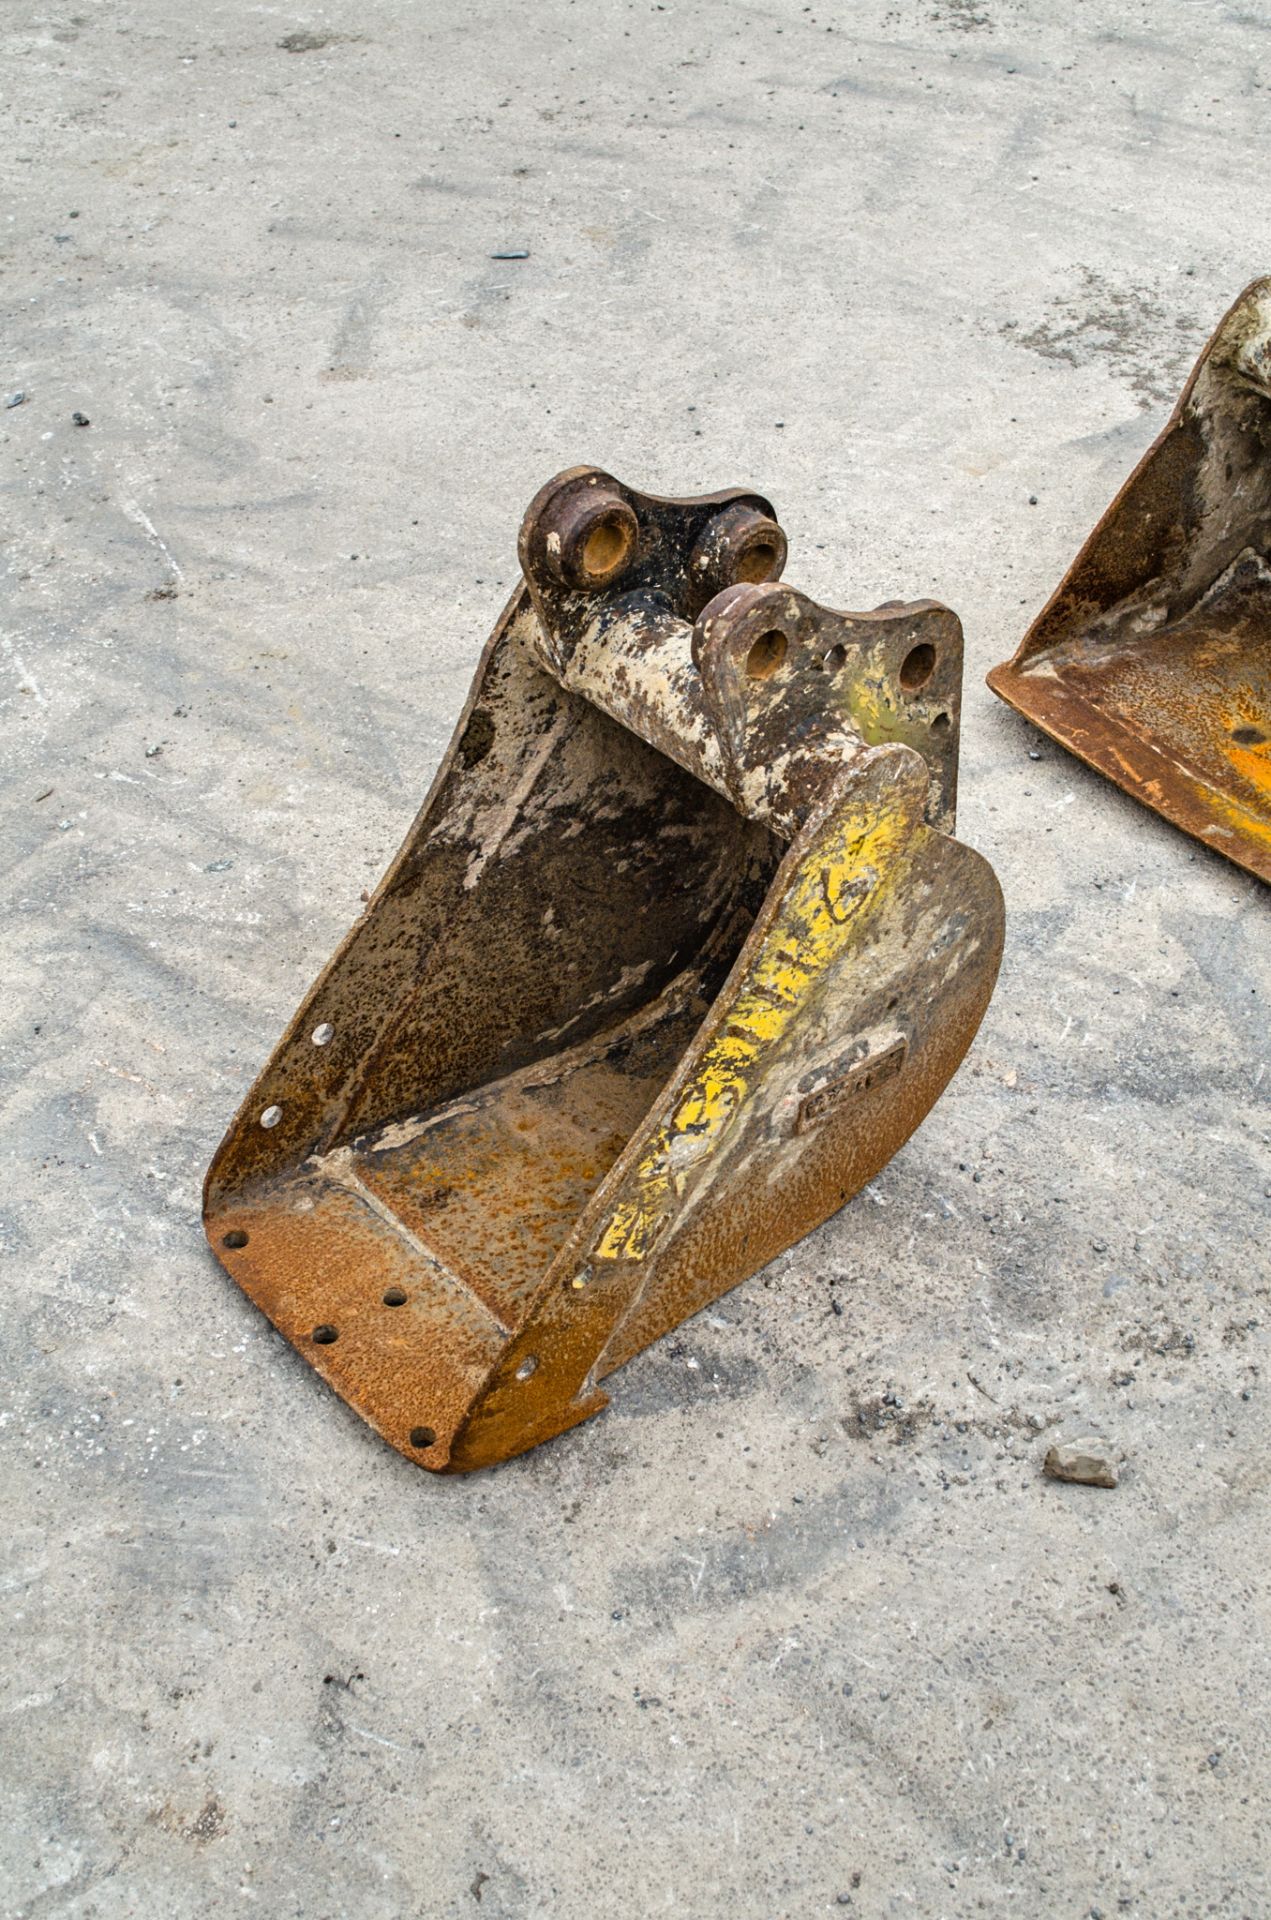 Kubota KX61-3 2.6 tonne rubber tracked mini excavator Year: 2014 S/N: 80673 Recorded Hours: 3467 - Image 14 of 23